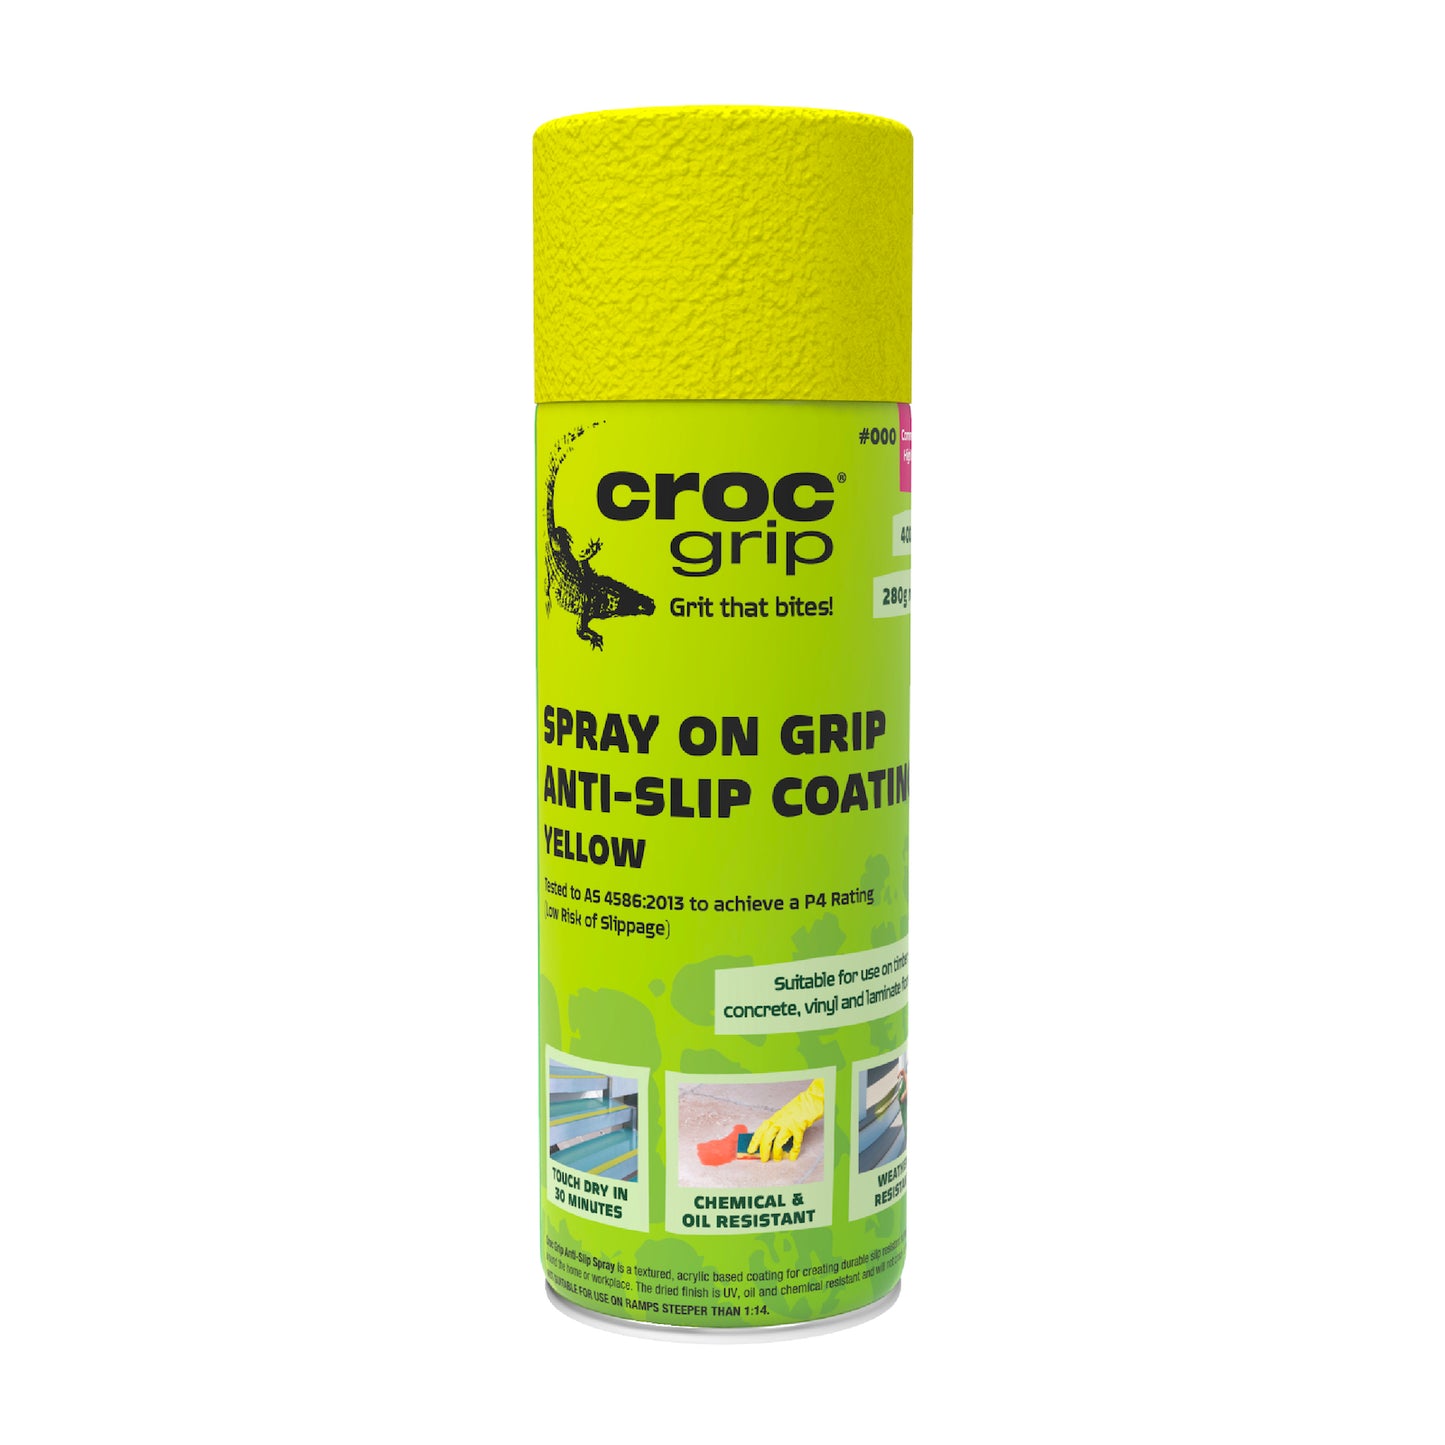 Yellow Spray on Grip Anti-Slip Coating